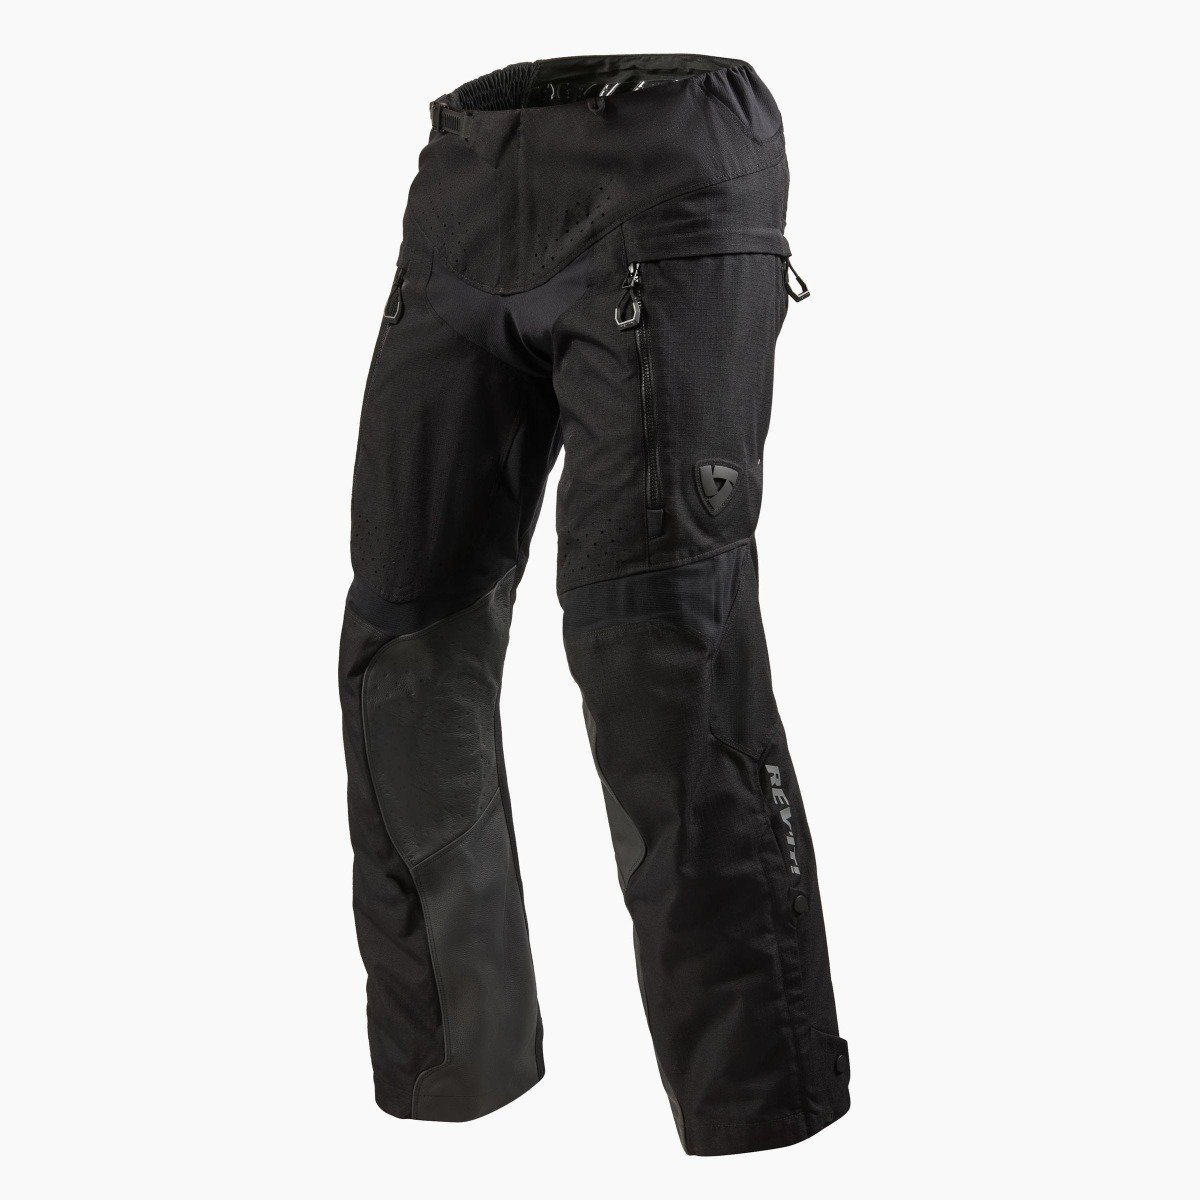 Image of REV'IT! Continent Short Black Motorcycle Pants Size XYL EN